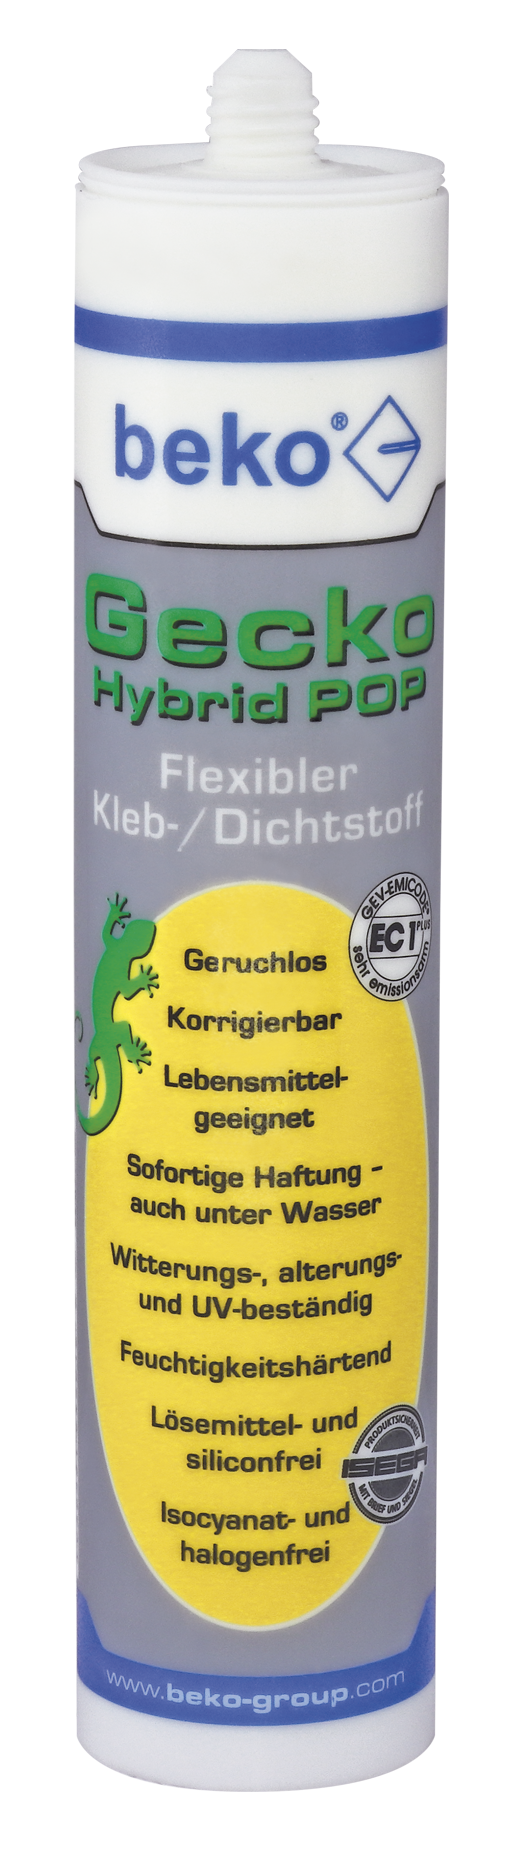 Gecko Hybrid POP 310ml weiß - Flexibler 1-Komponenten-Kleb-/Dichtstoff